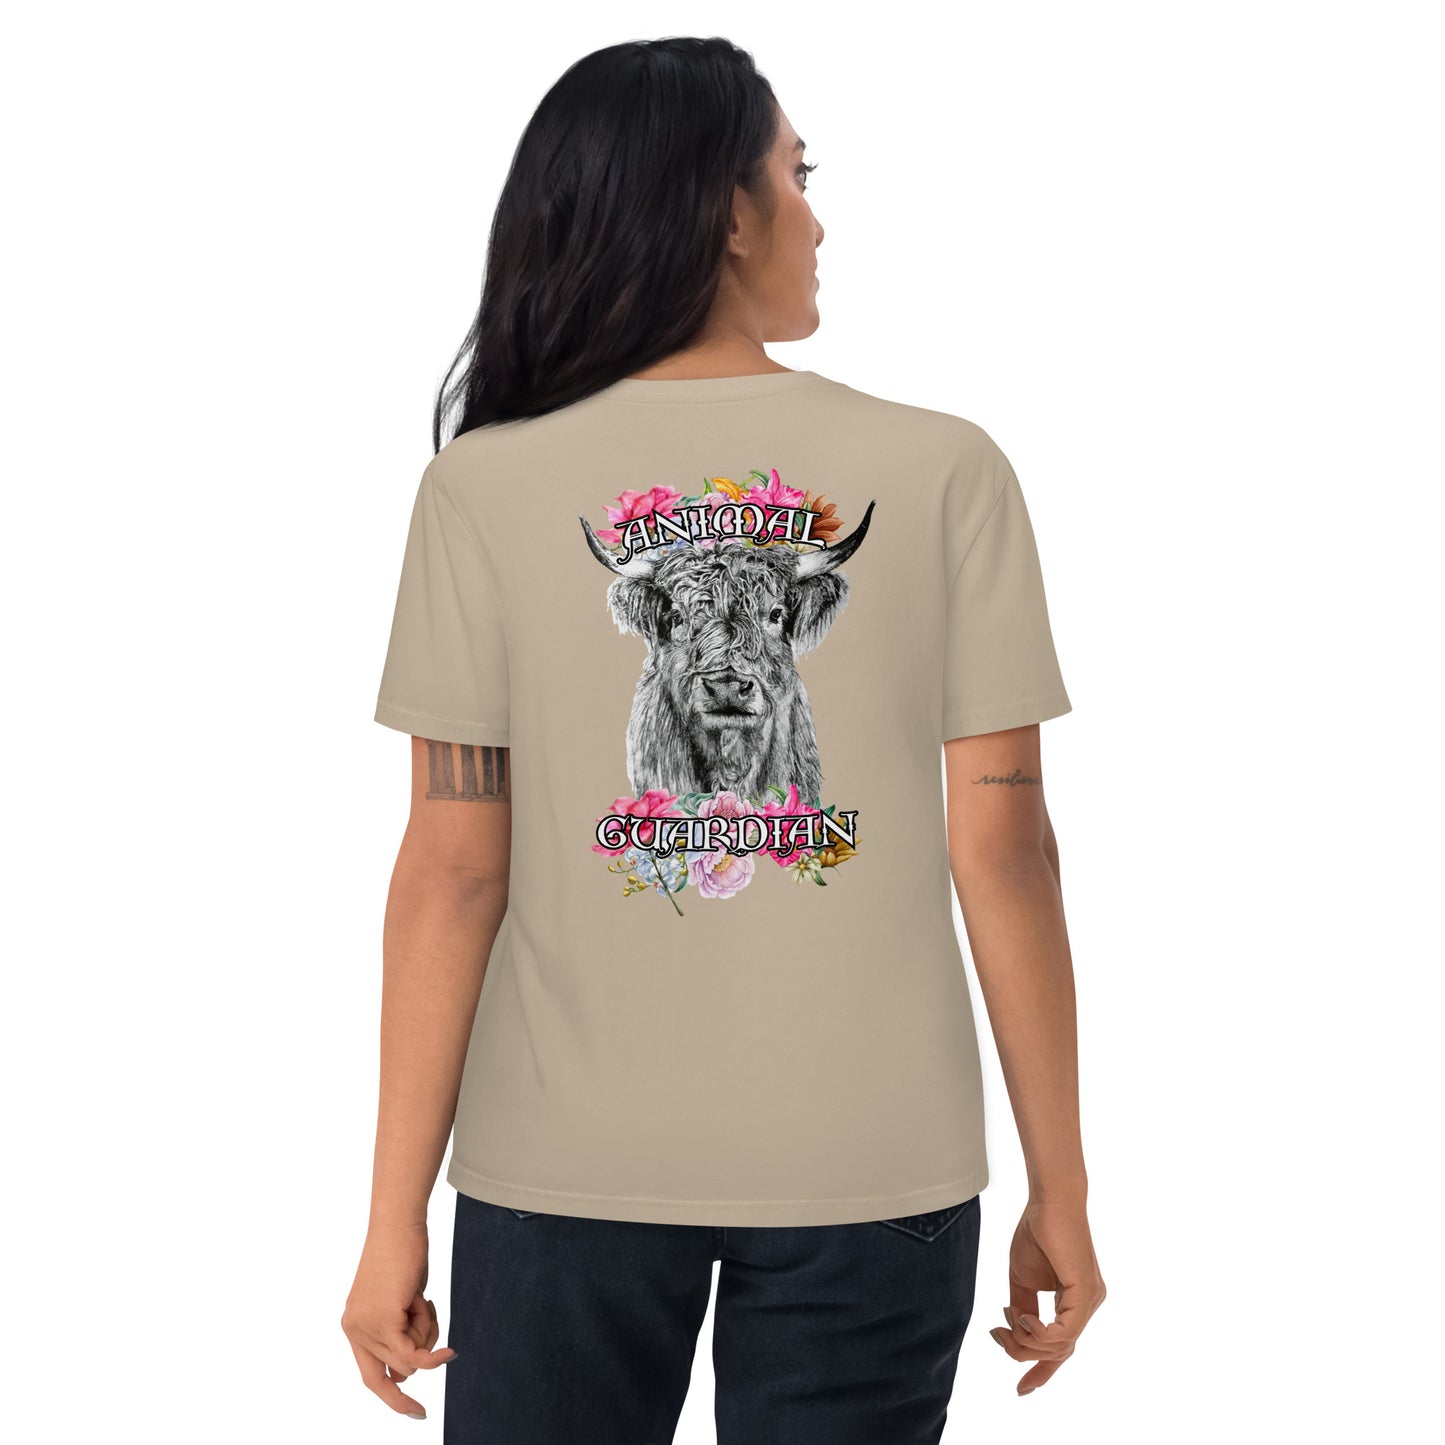 VEGAN "Animal Guardian" Unisex Organic Cotton T-shirt